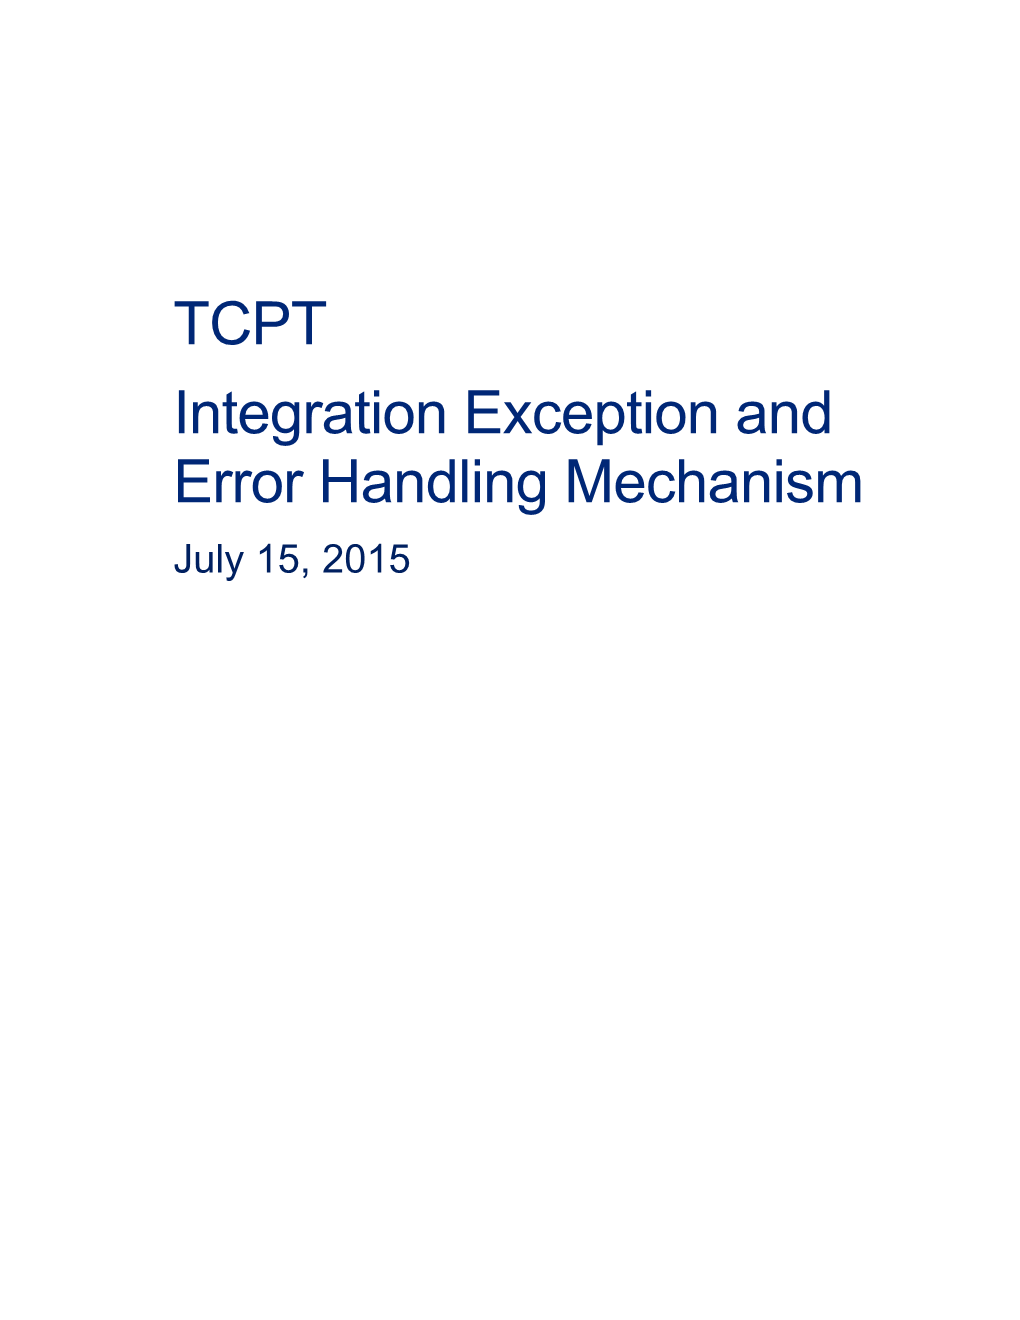 Integration Exception and Error Handling Mechanism